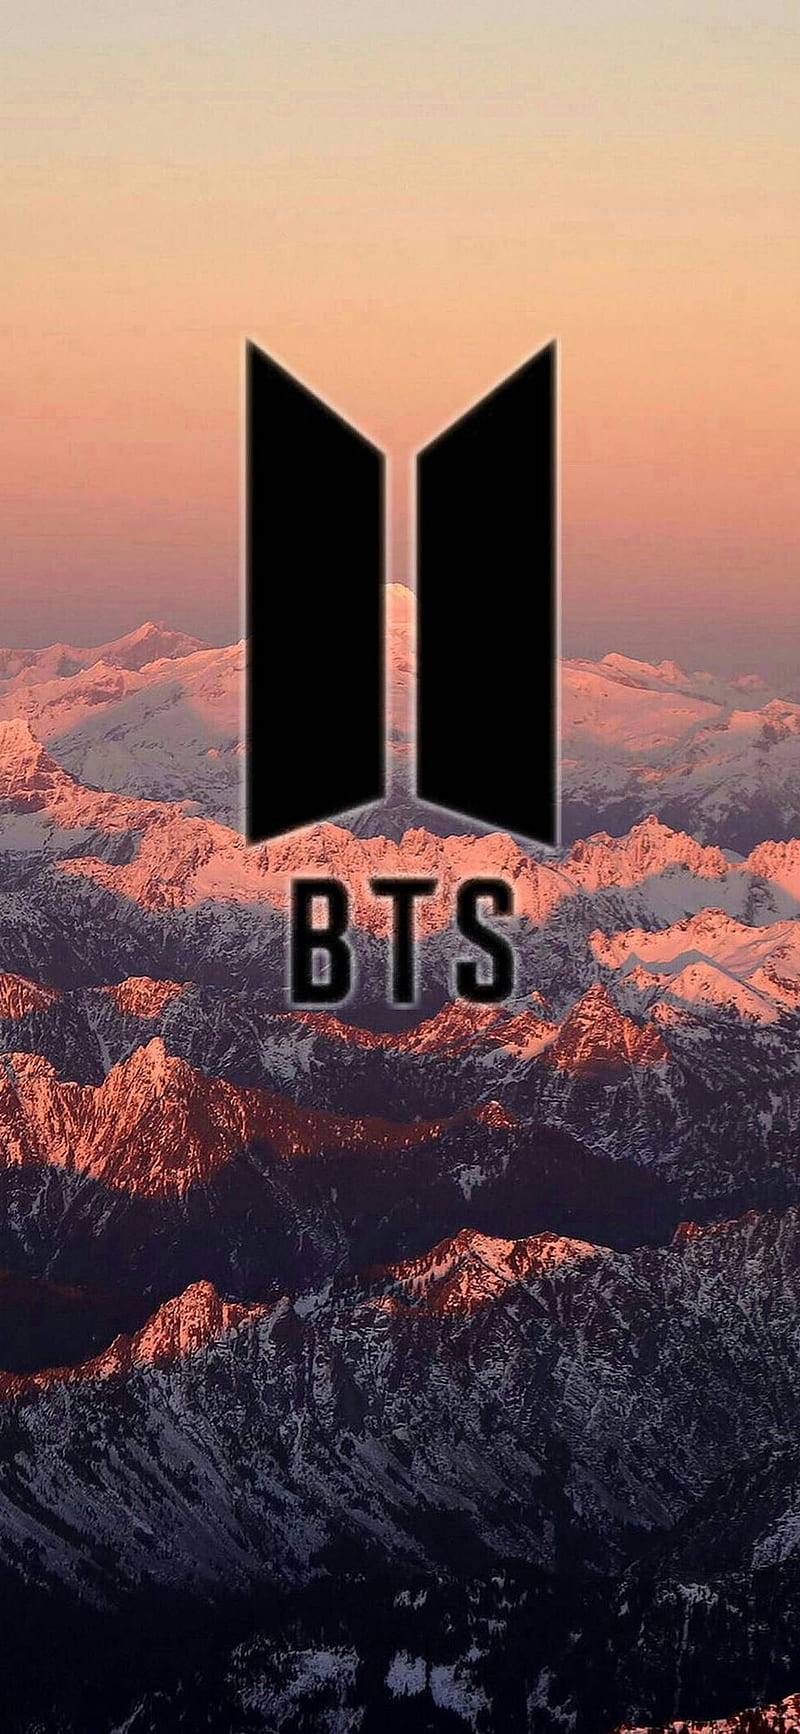 bts-logo-bts-army-kpop-hip-hop-music-drawing-symbol-letter-2018-png-clipart.jpg  by Mellissa Black | Chart Minder